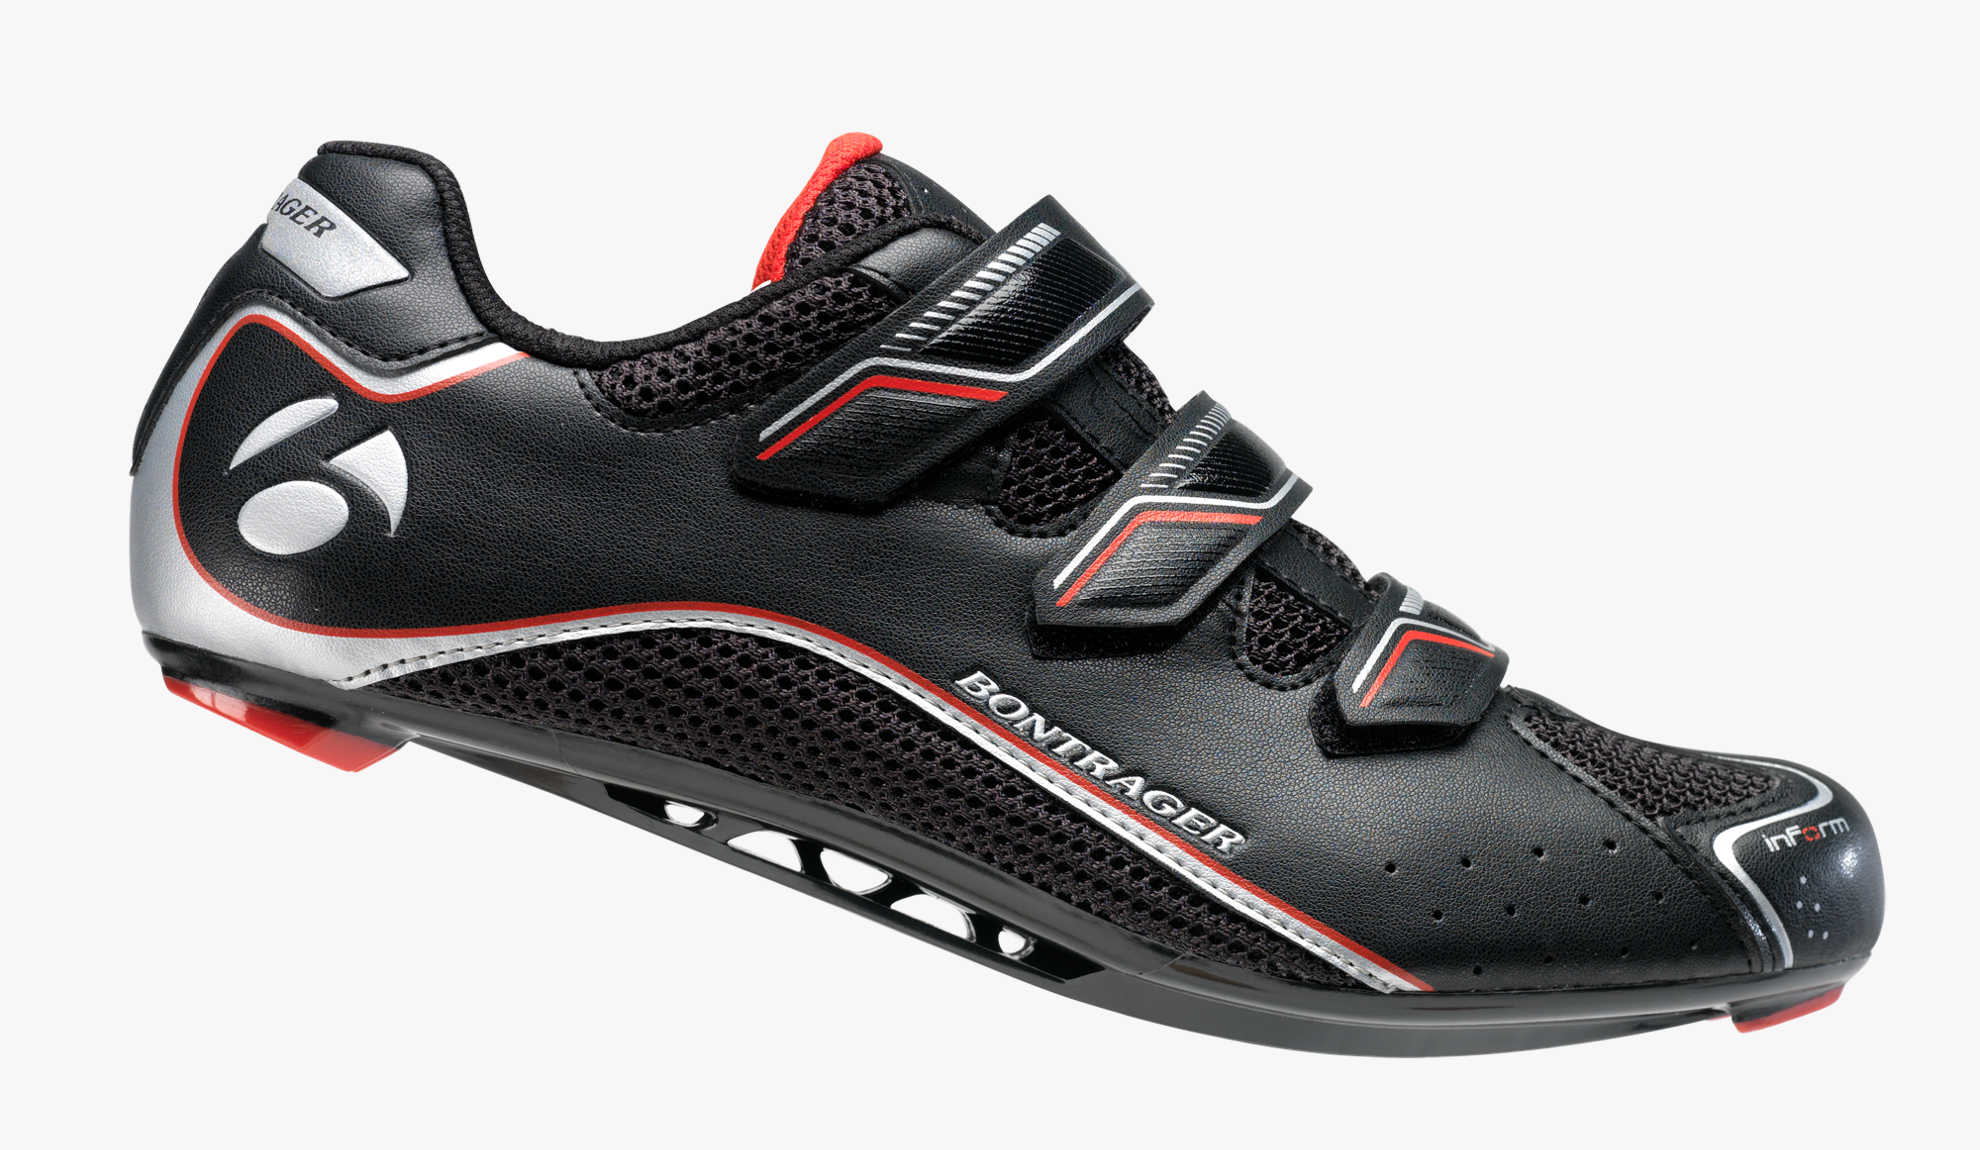 Bontrager Race Road Shoe | Cycling shoes | Cycling apparel | Apparel ...